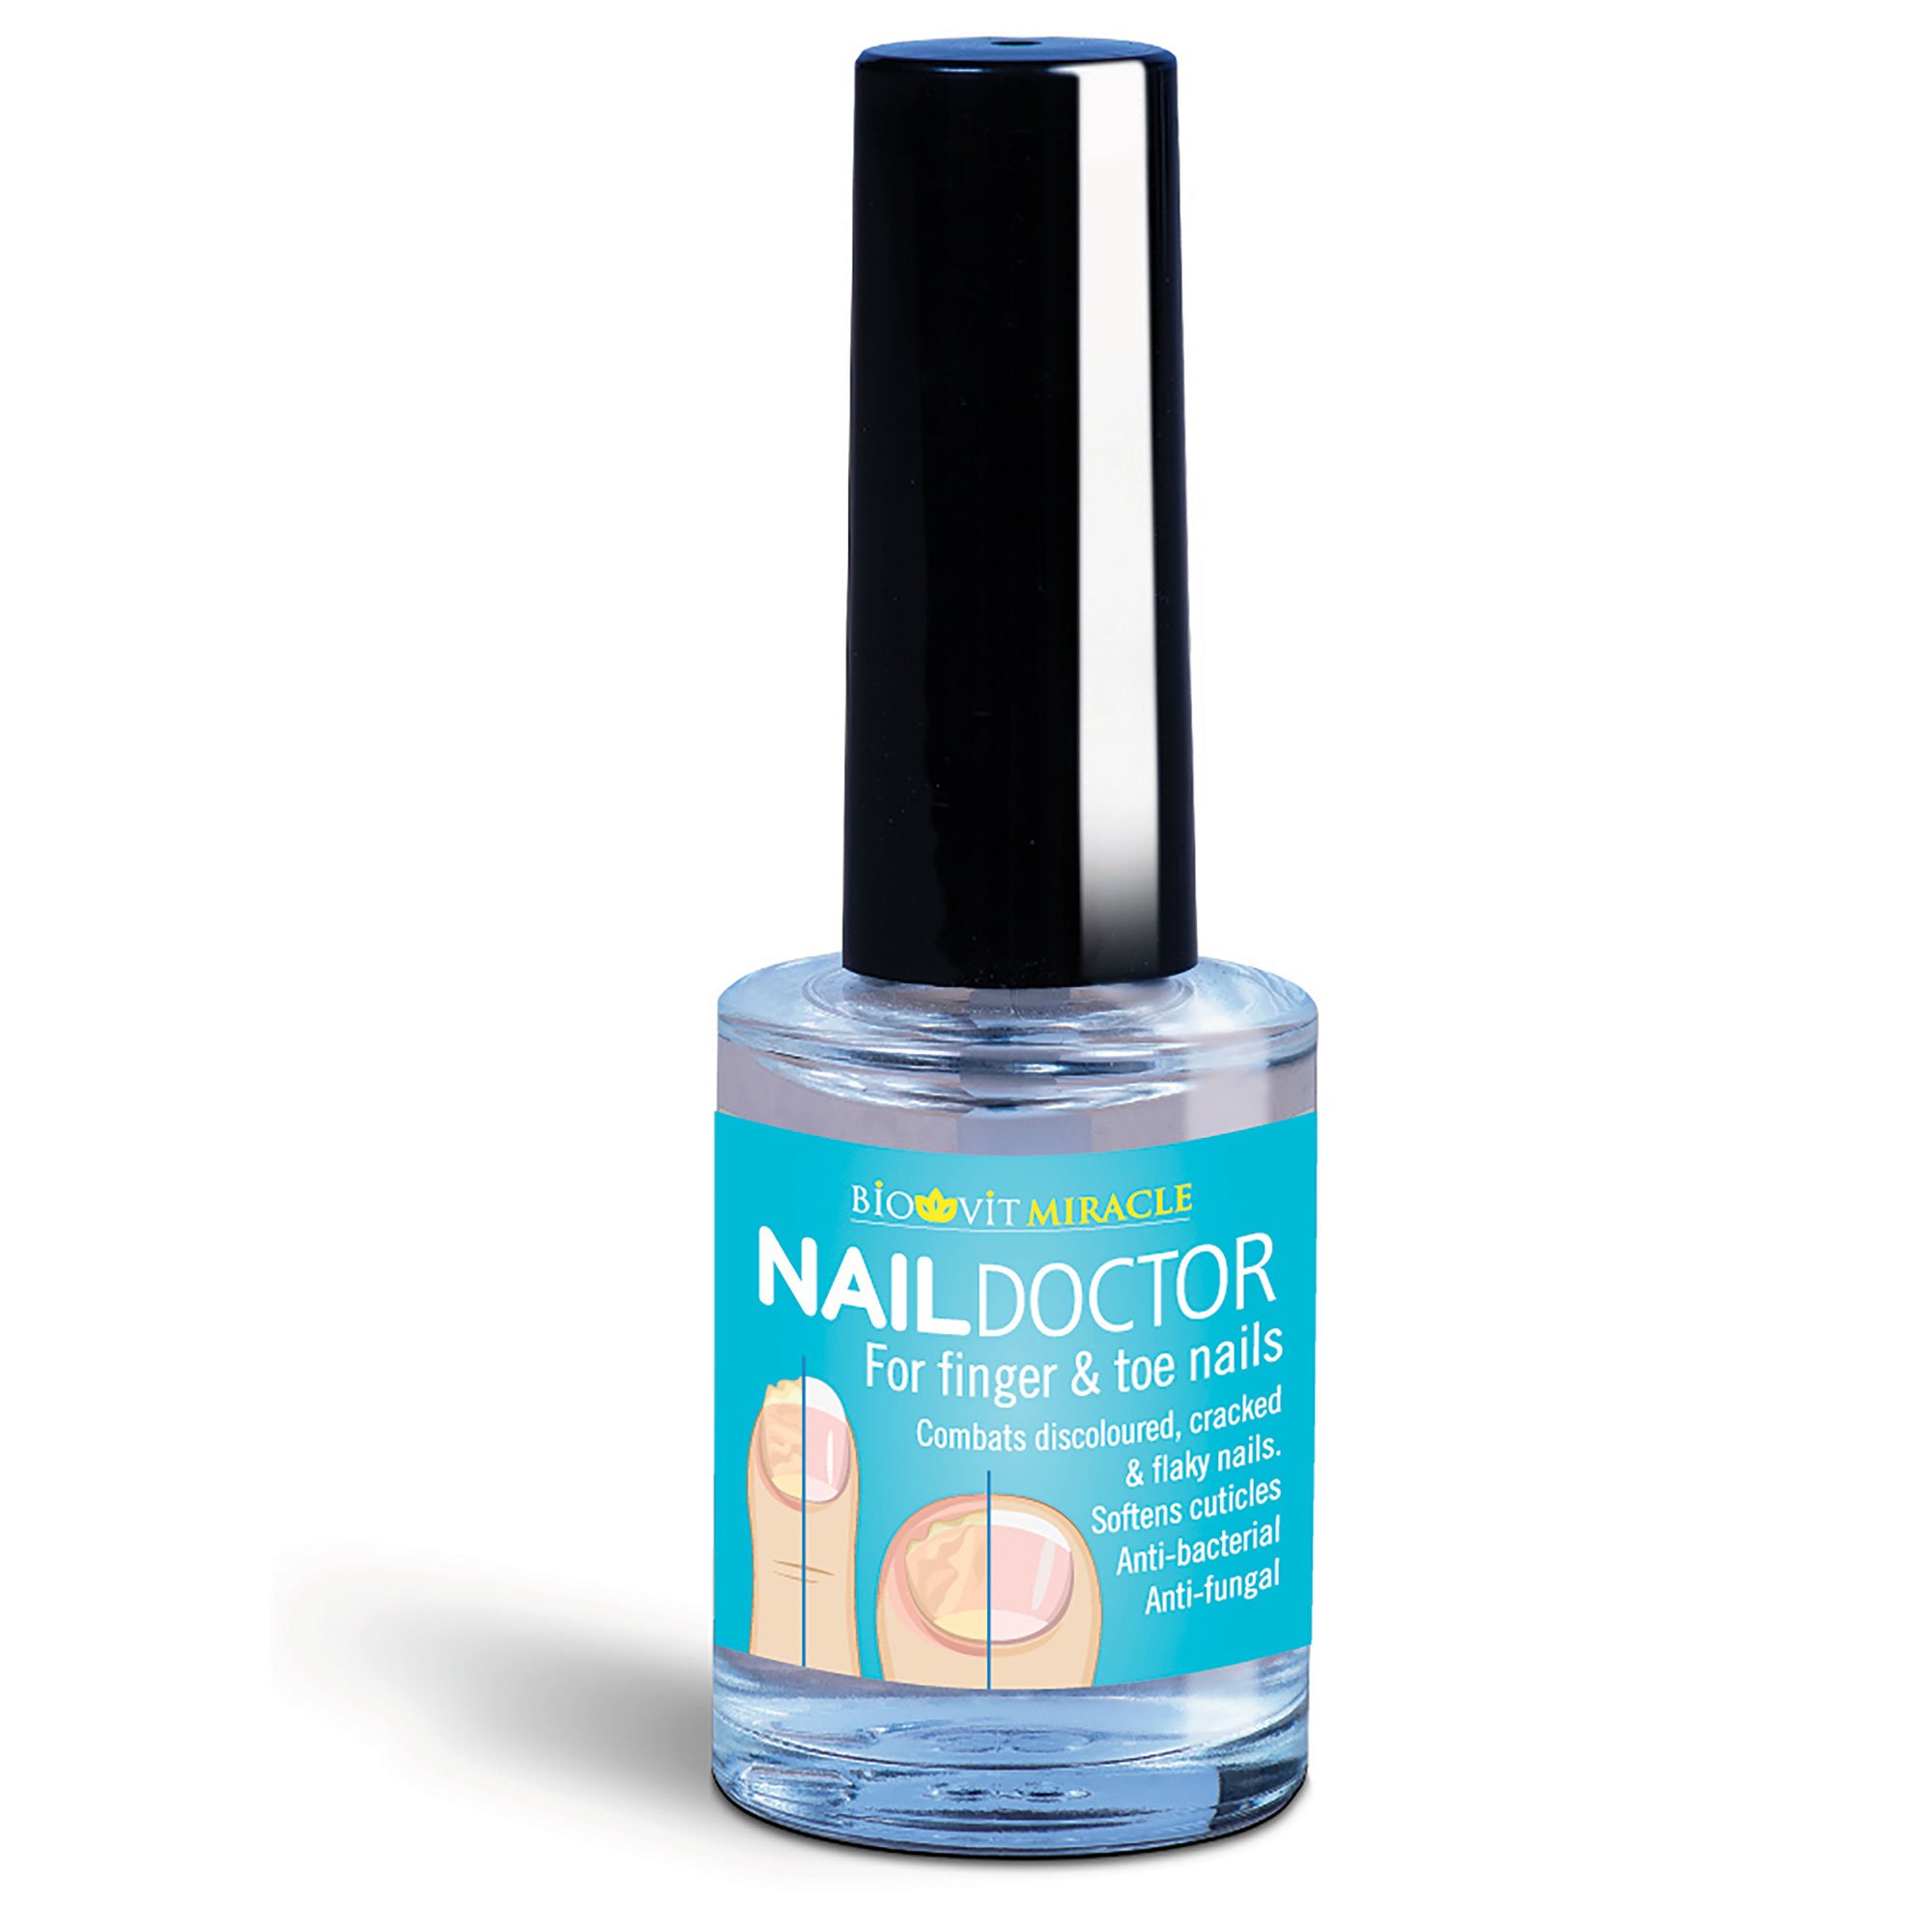 Bio Vit Nail Doctor - Help Prevent Ingrown Nails & Improve Cuticle Health!